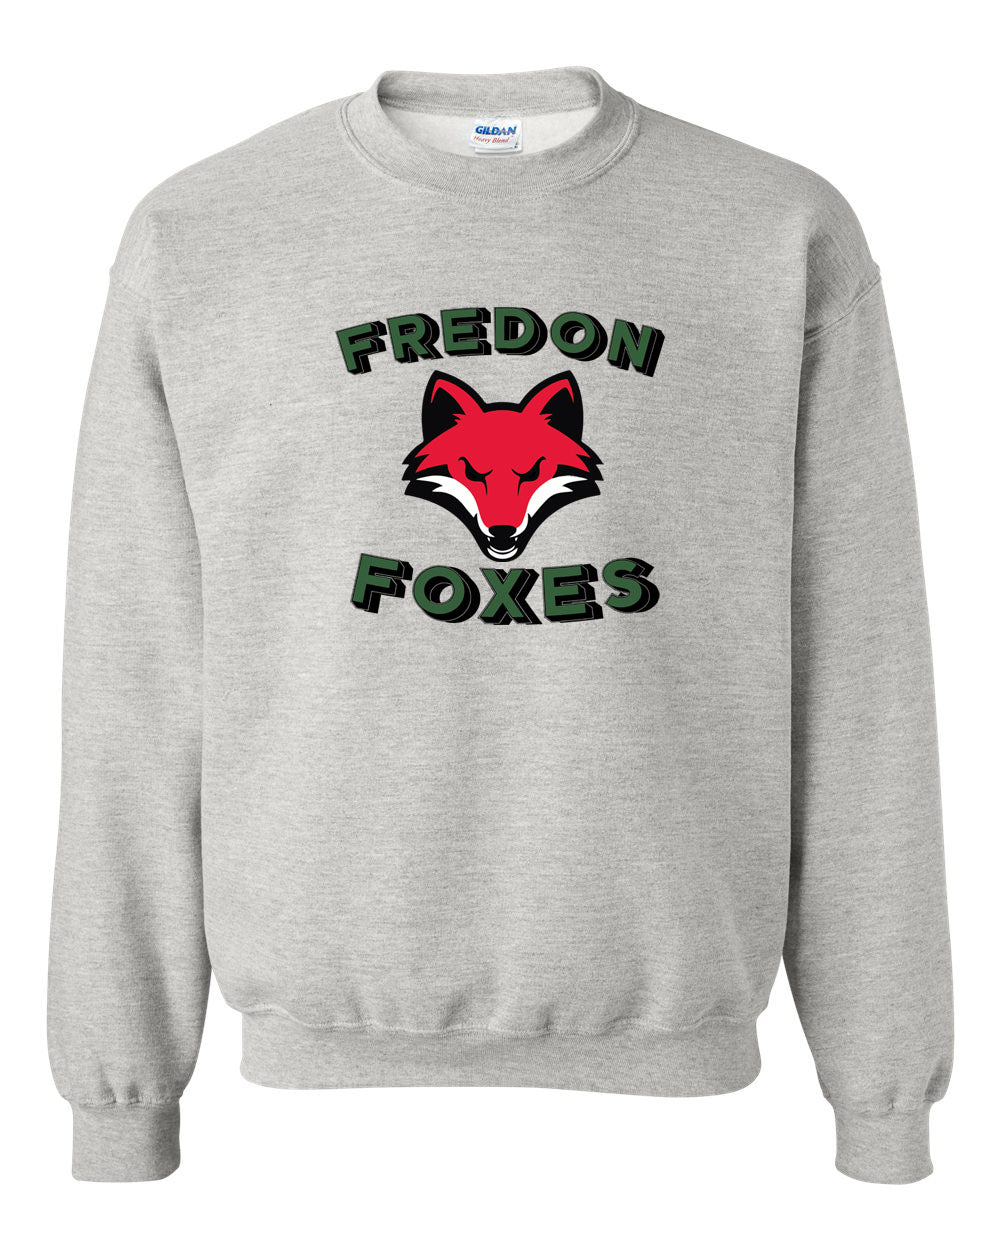 Fredon Design 1 non hooded sweatshirt